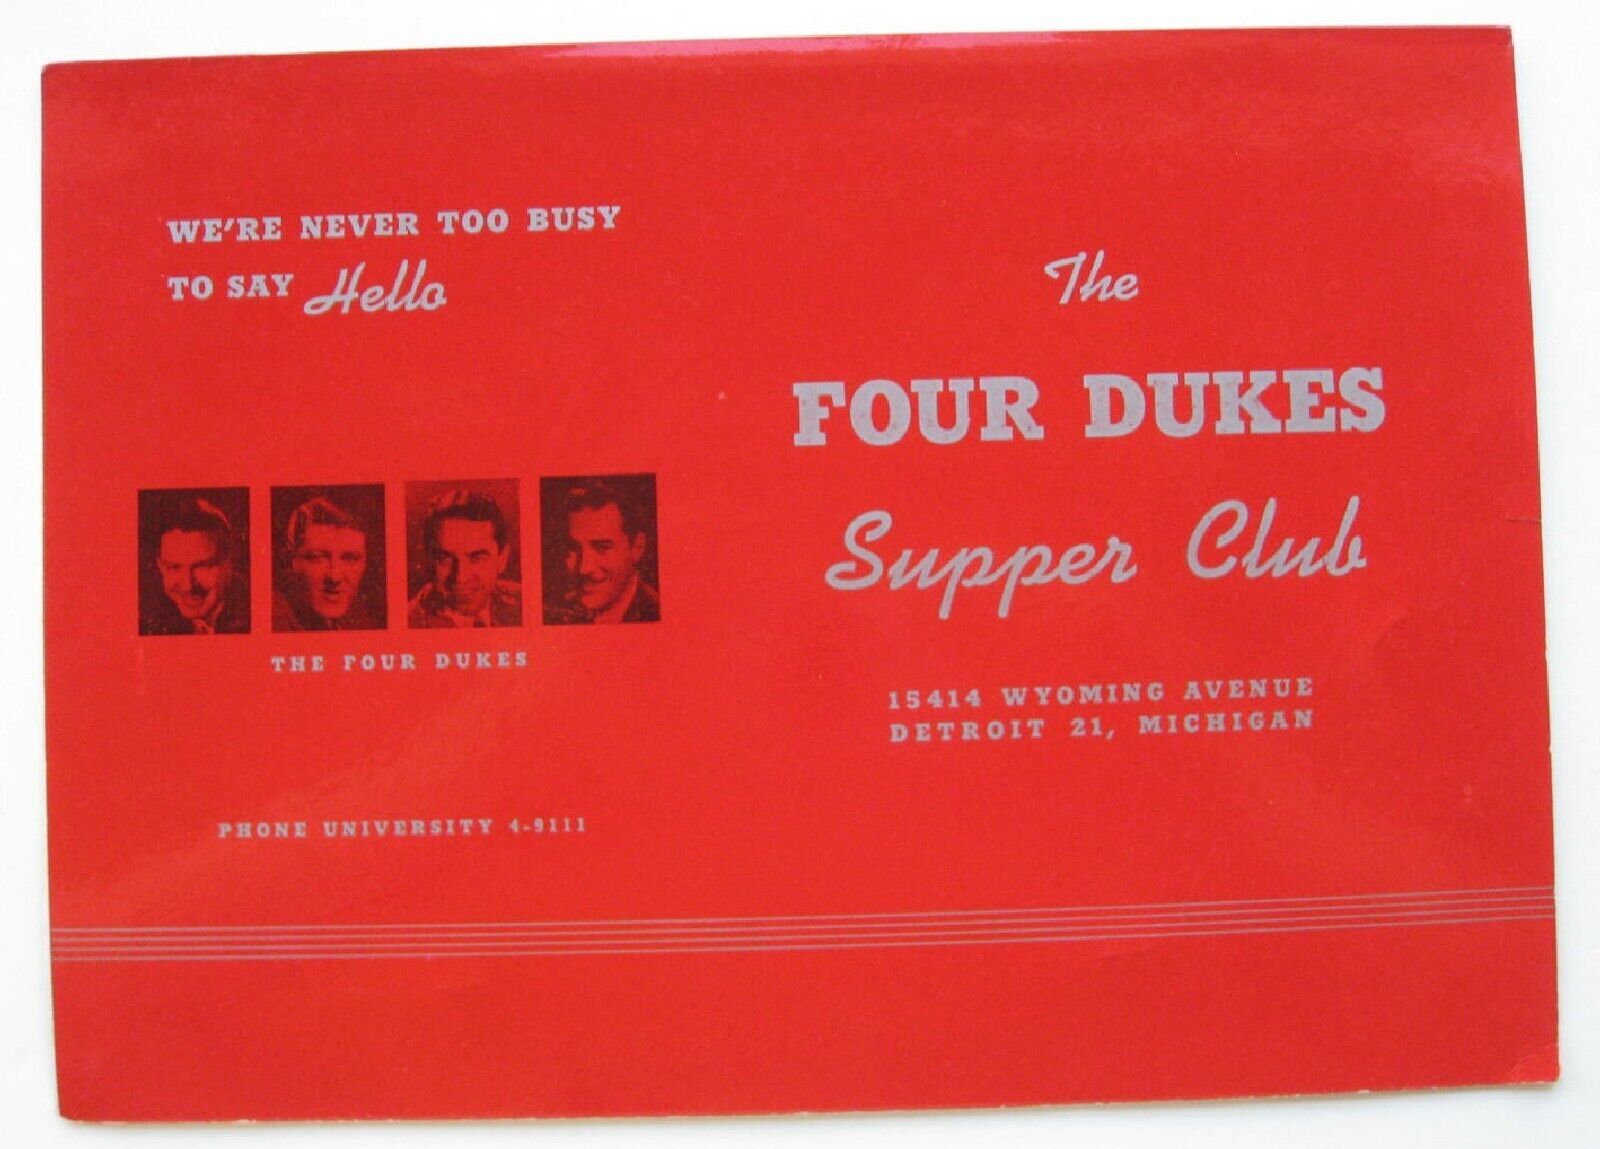 Restaurant Menu For The Four Dukes Supper Club, Detroit, Michigan 50\'s